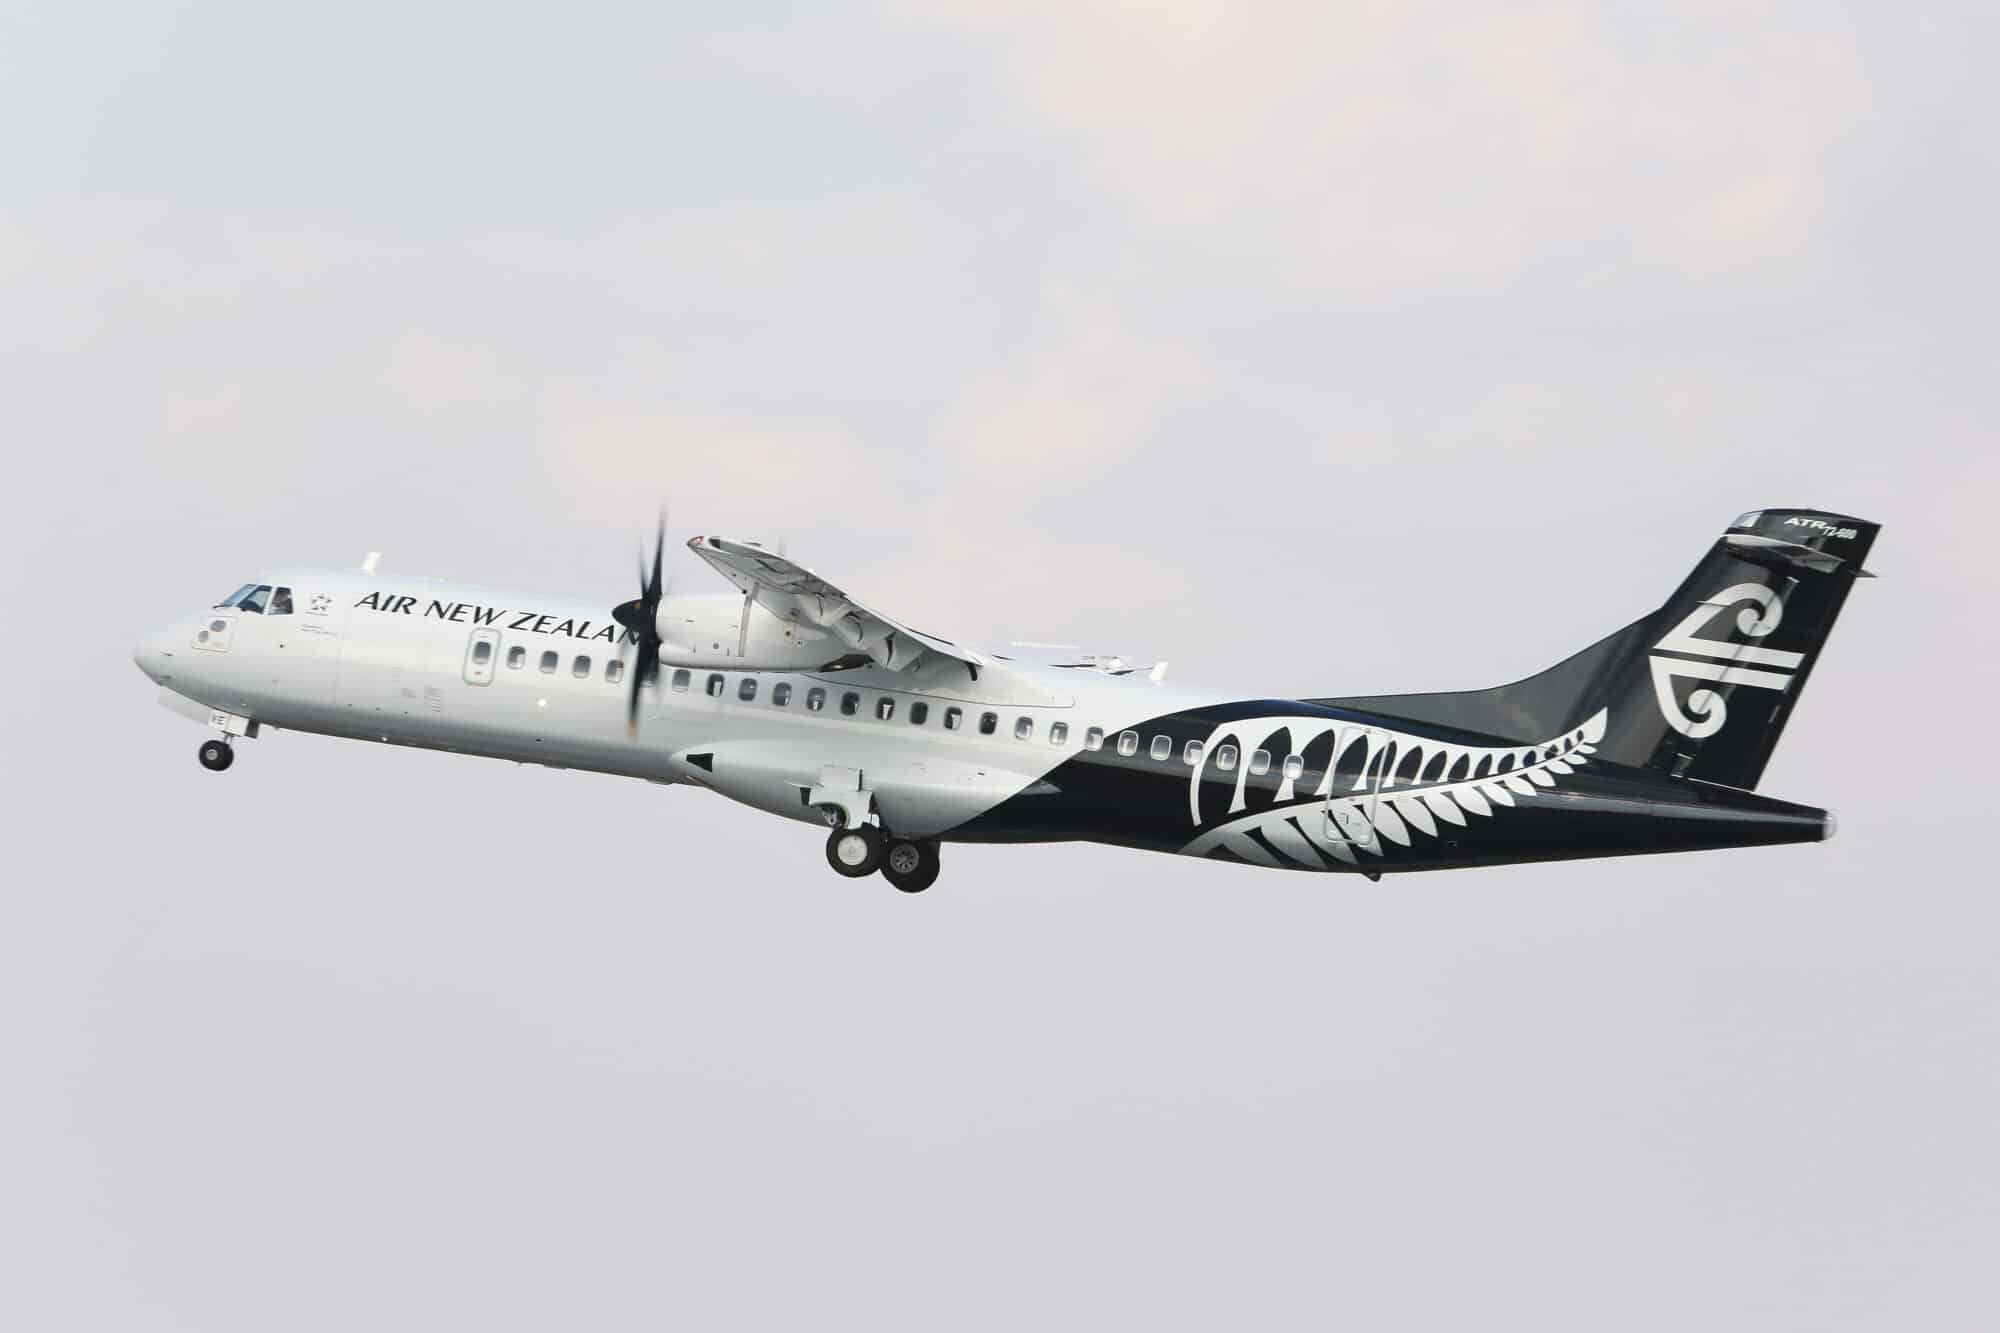 ATR 72-600 Air New Zealand MSN 1182 taking off from Blagnac airport